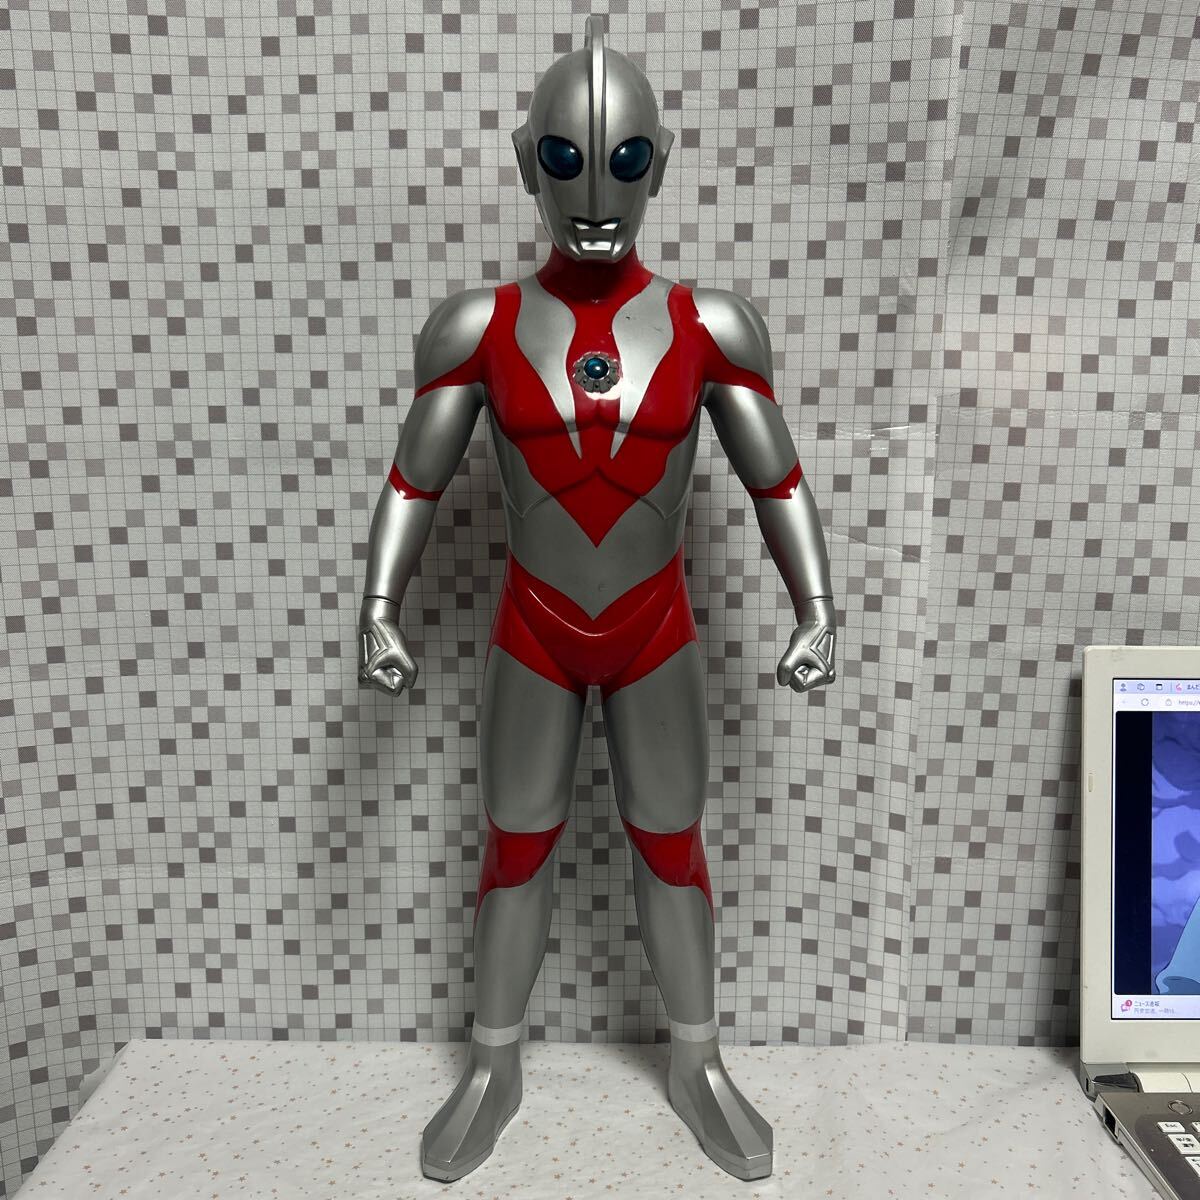 rgoo Bandai DX Deluxe Ultraman Powered большой размер фигурка высота примерно 56cm